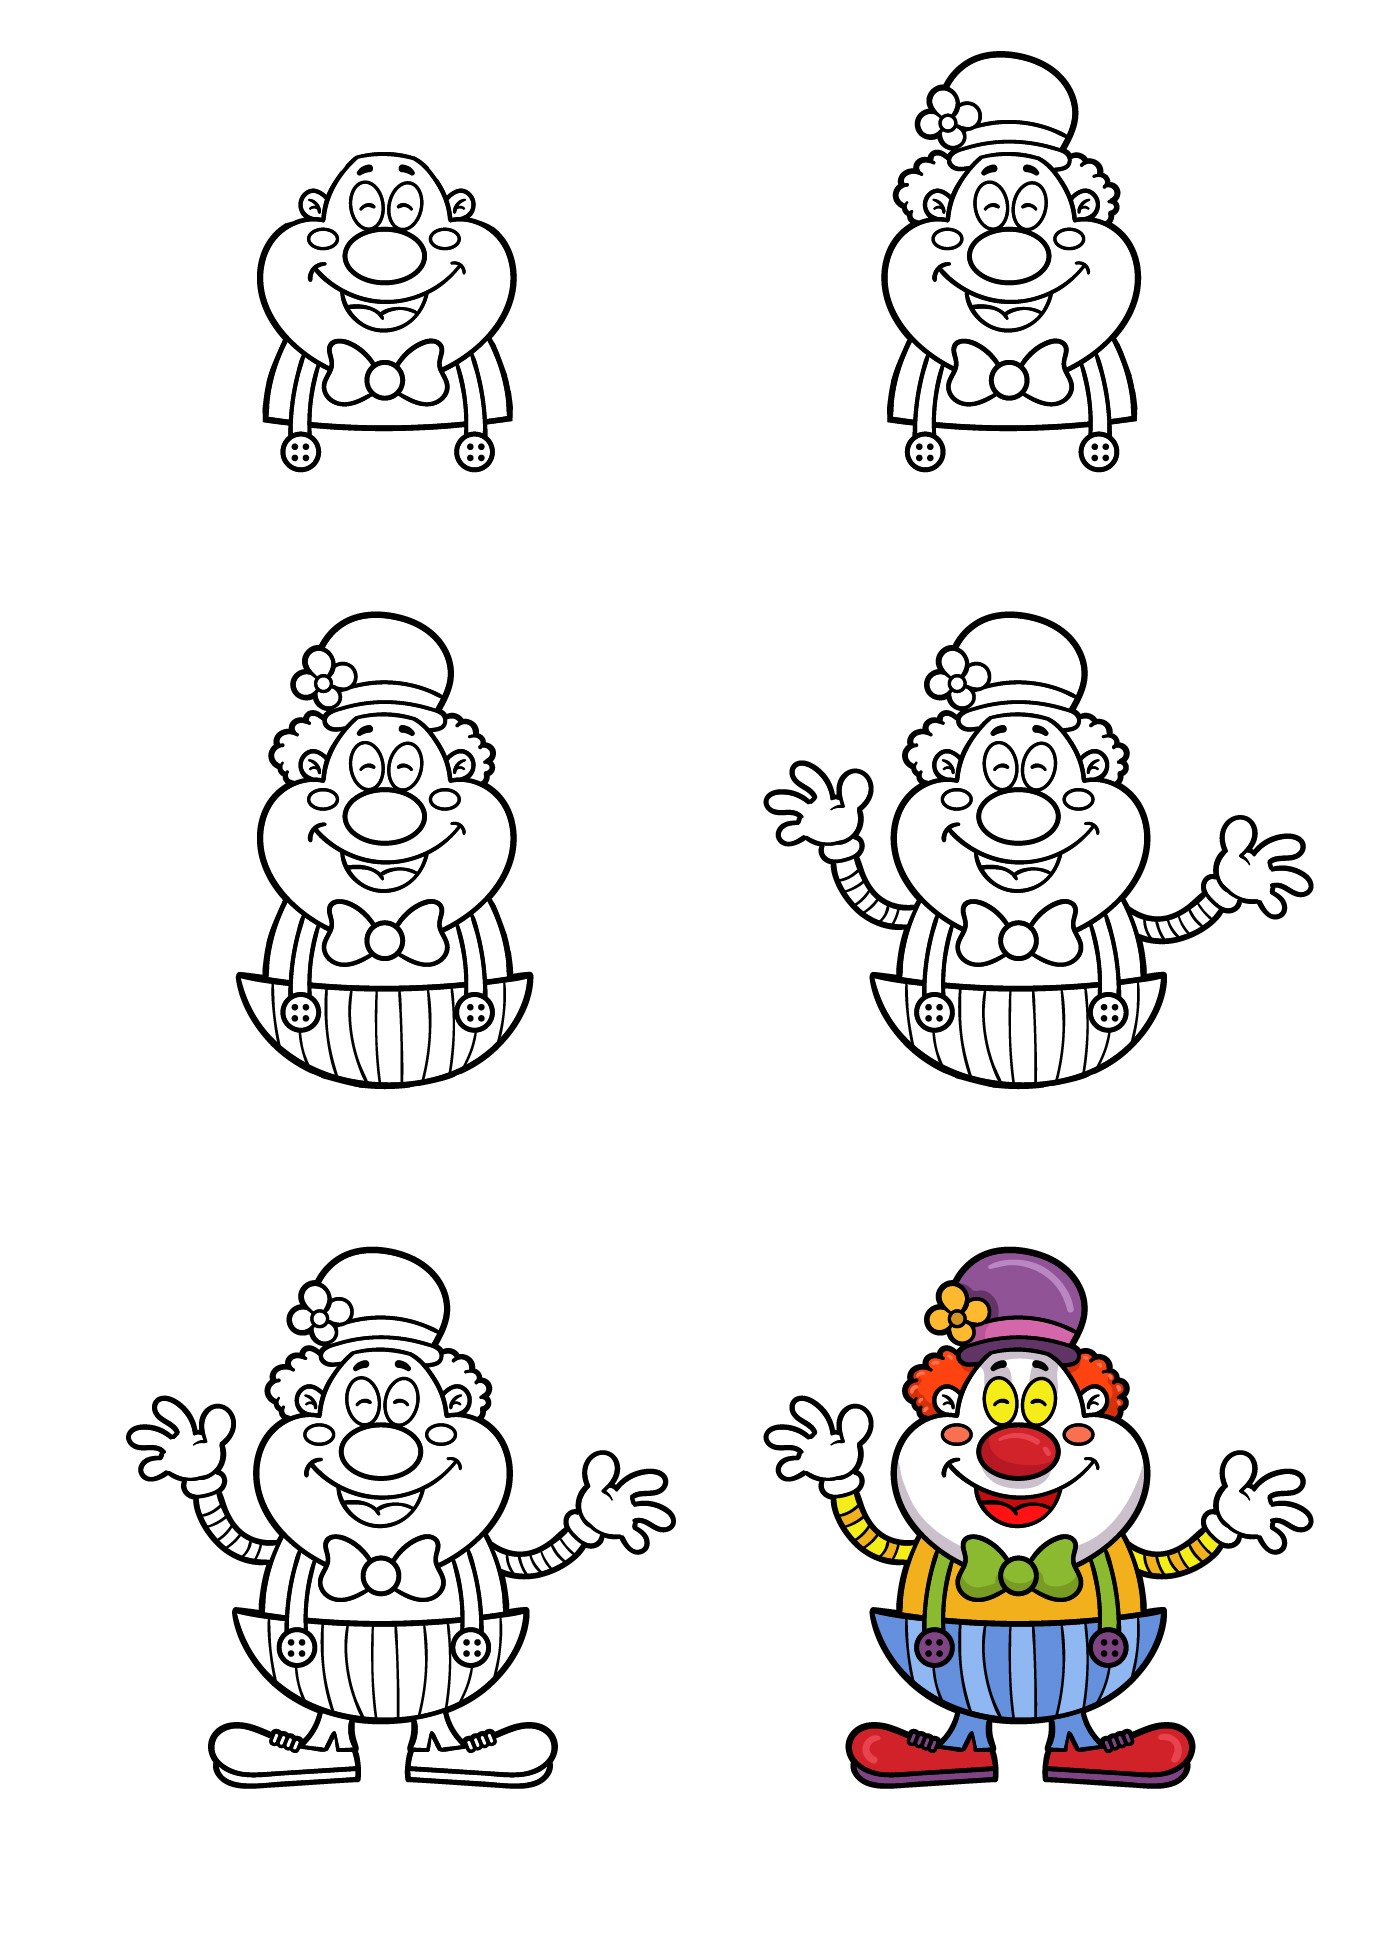 How to Draw a Cartoon Clown